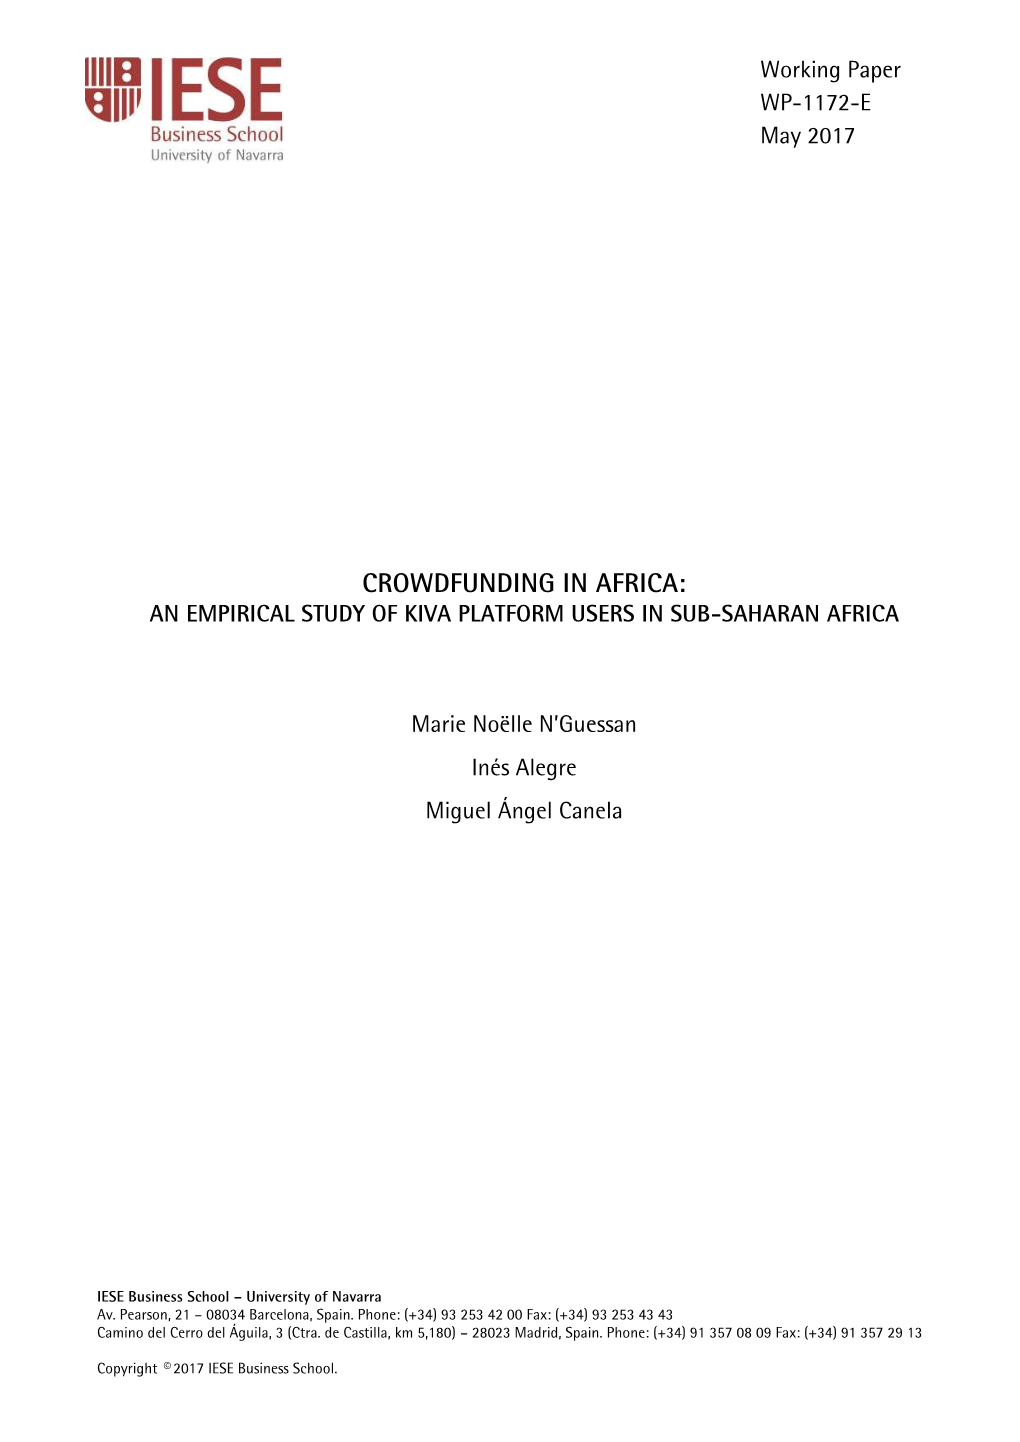 Crowdfunding in Africa: an Empirical Study of Kiva Platform Users in Sub-Saharan Africa